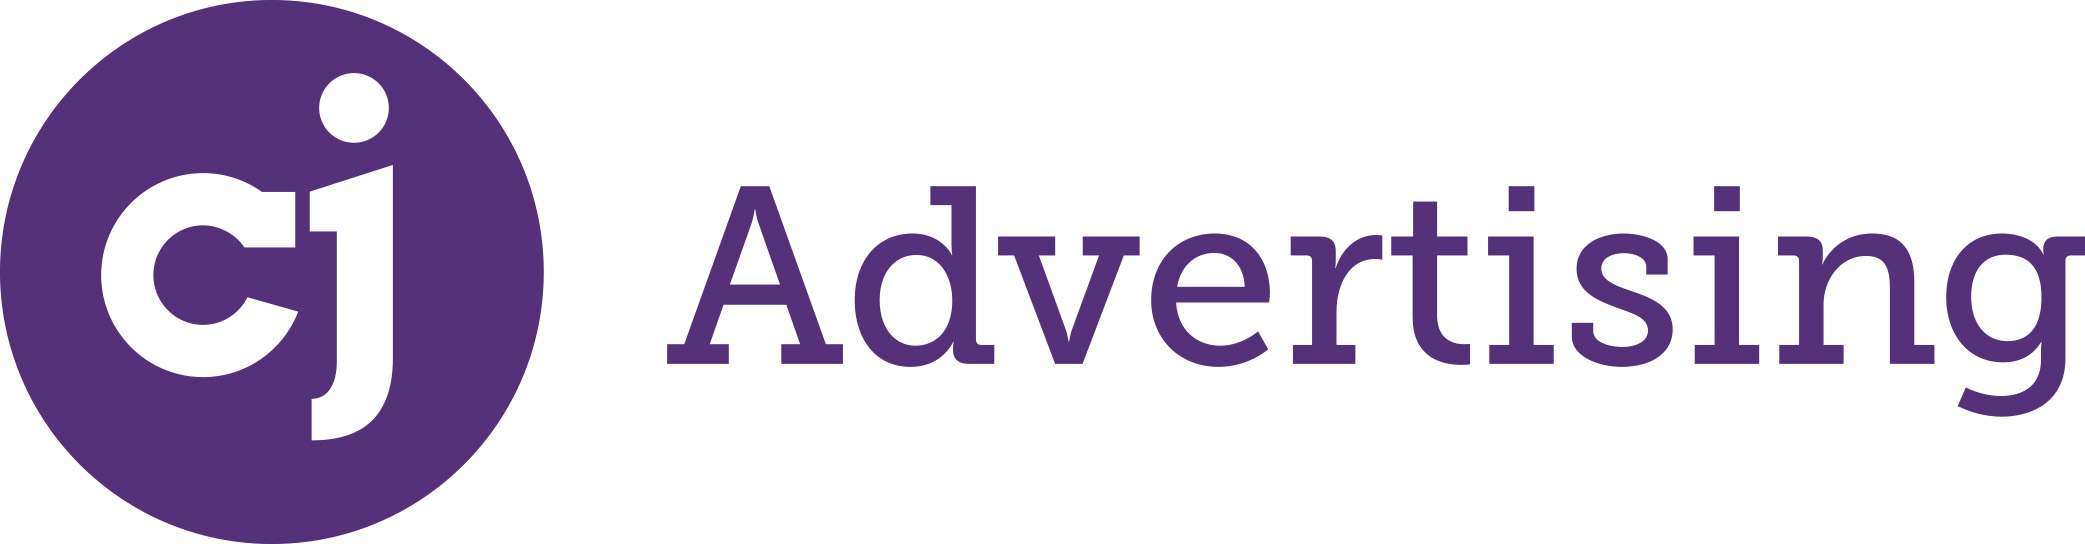 cj Advertising Company Logo